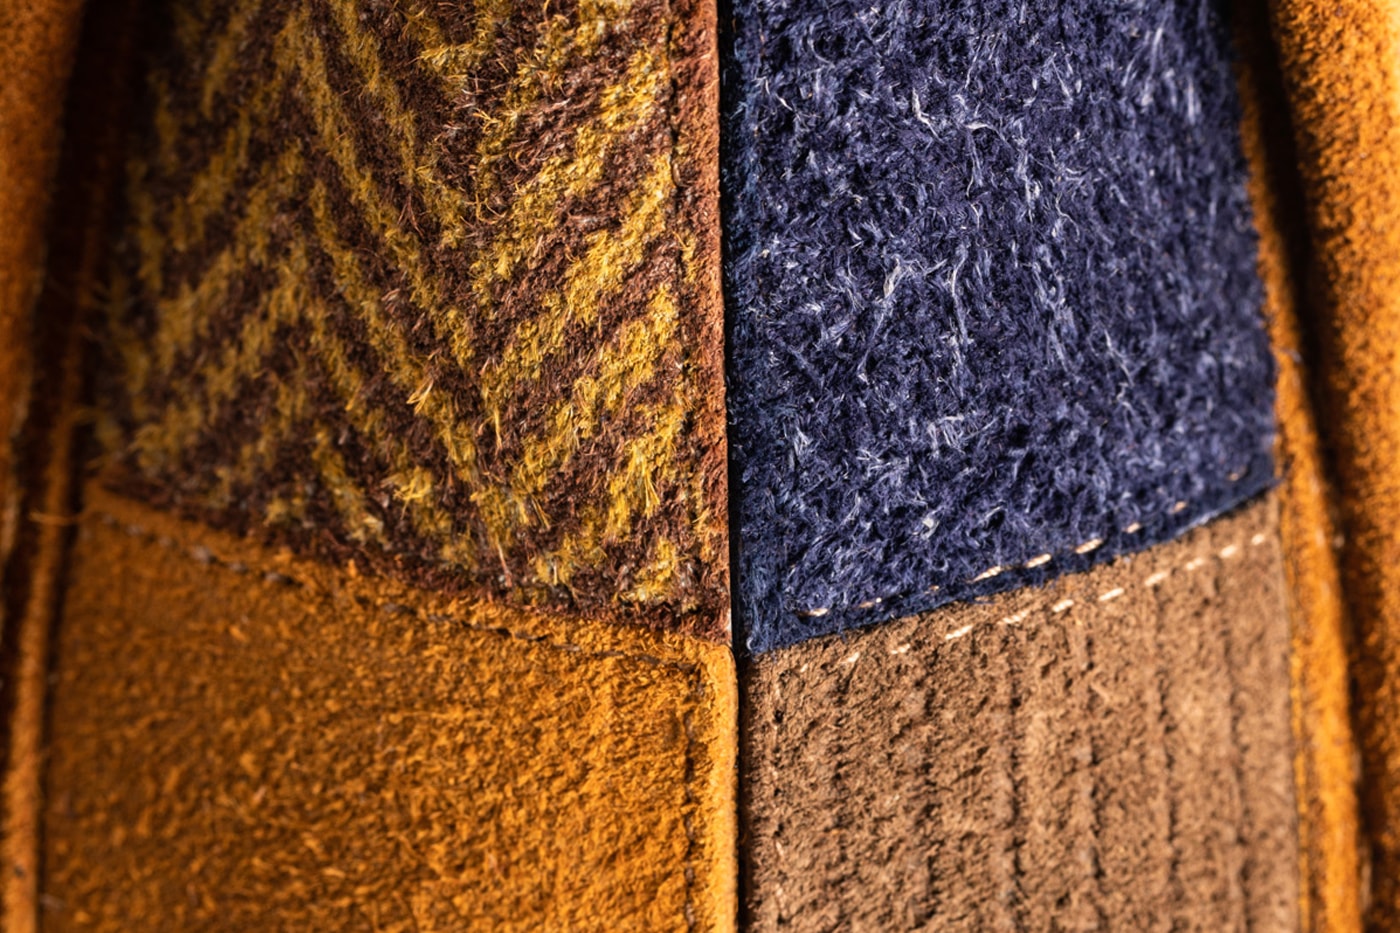 Bodega Clarks Originals Wallabee brown gum fabric tag herringbone patchwork release info date price